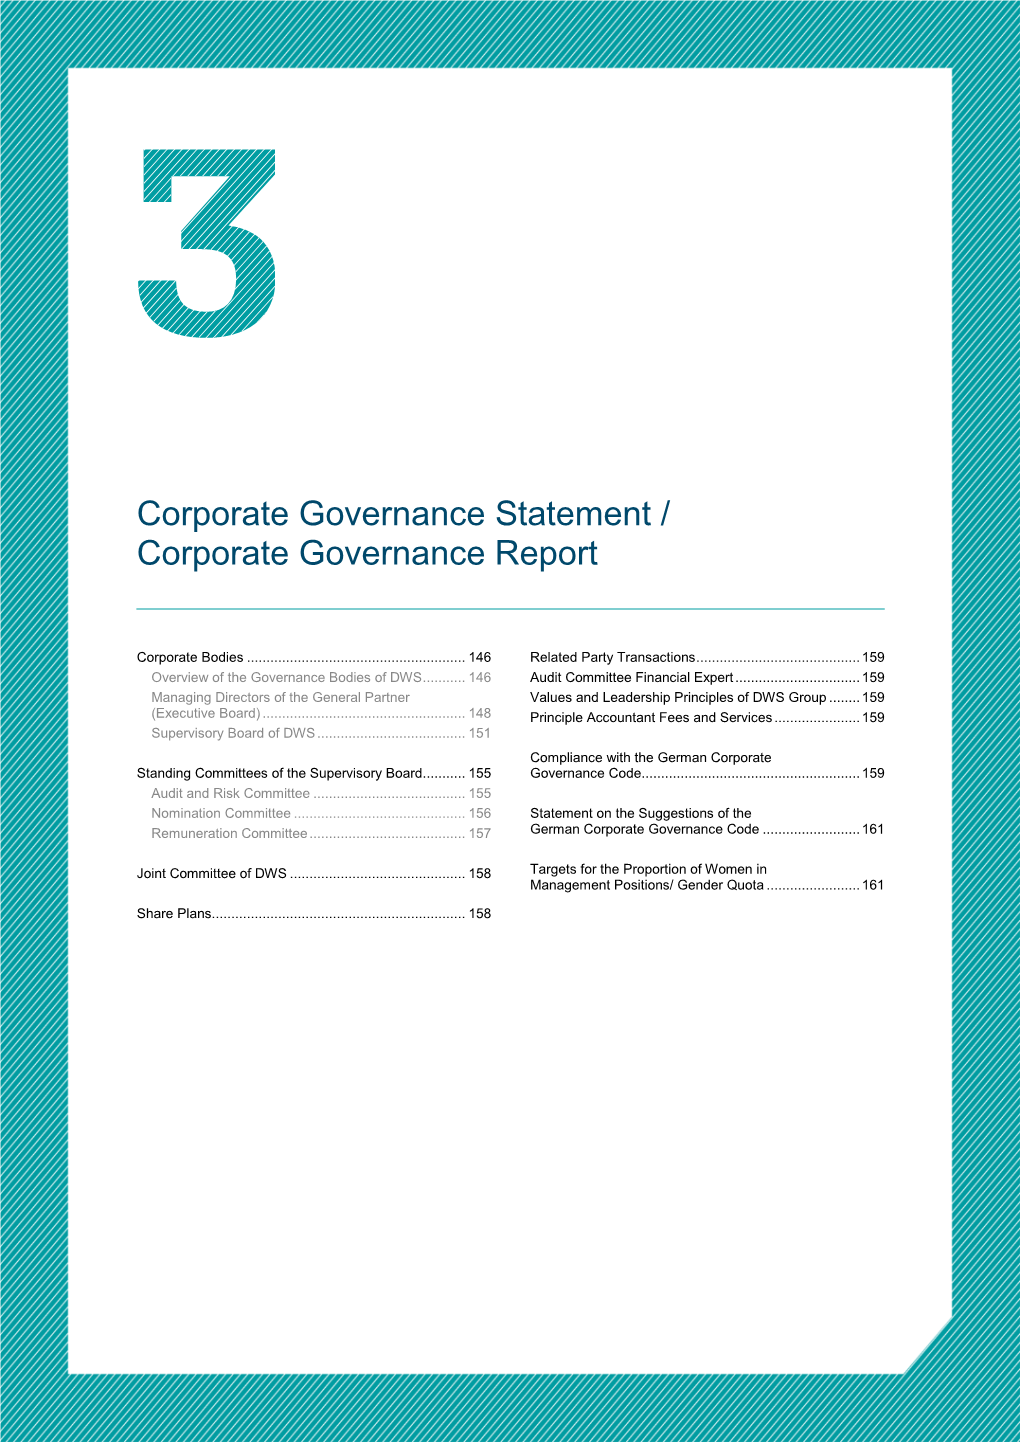 Corporate Governance Statement / Corporate Governance Report